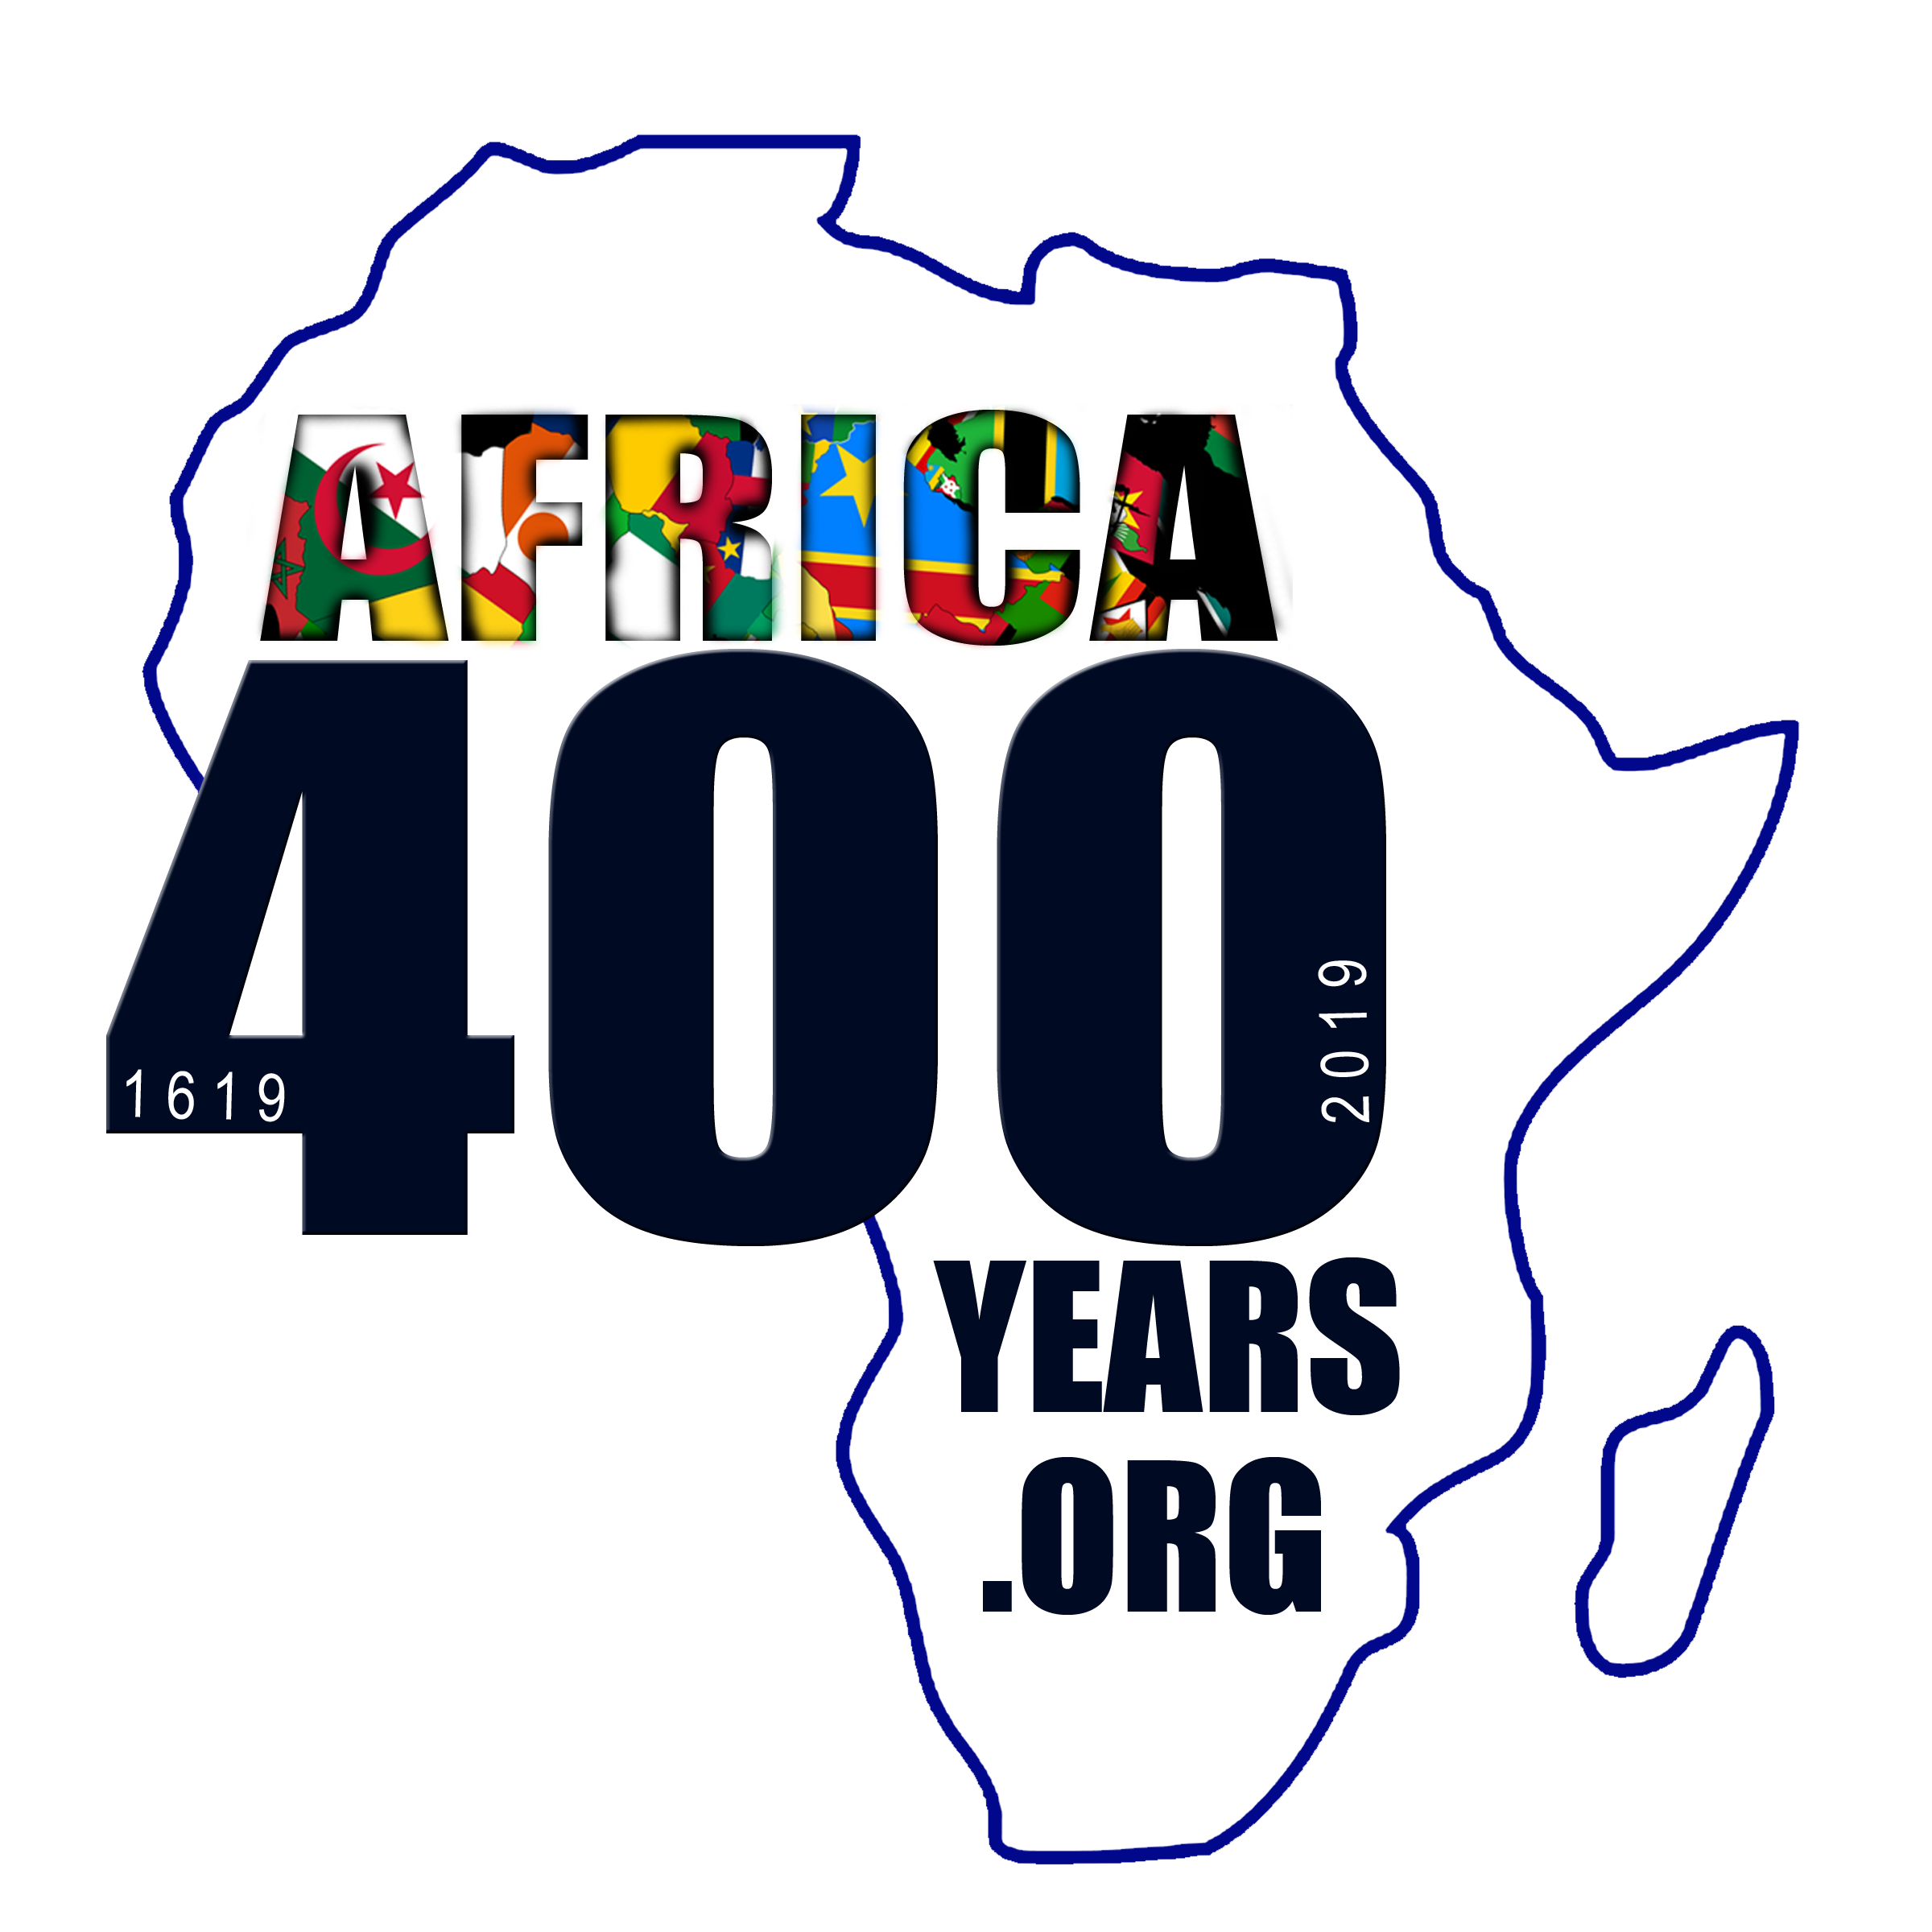 AFRICA 400 YEARS LOGO